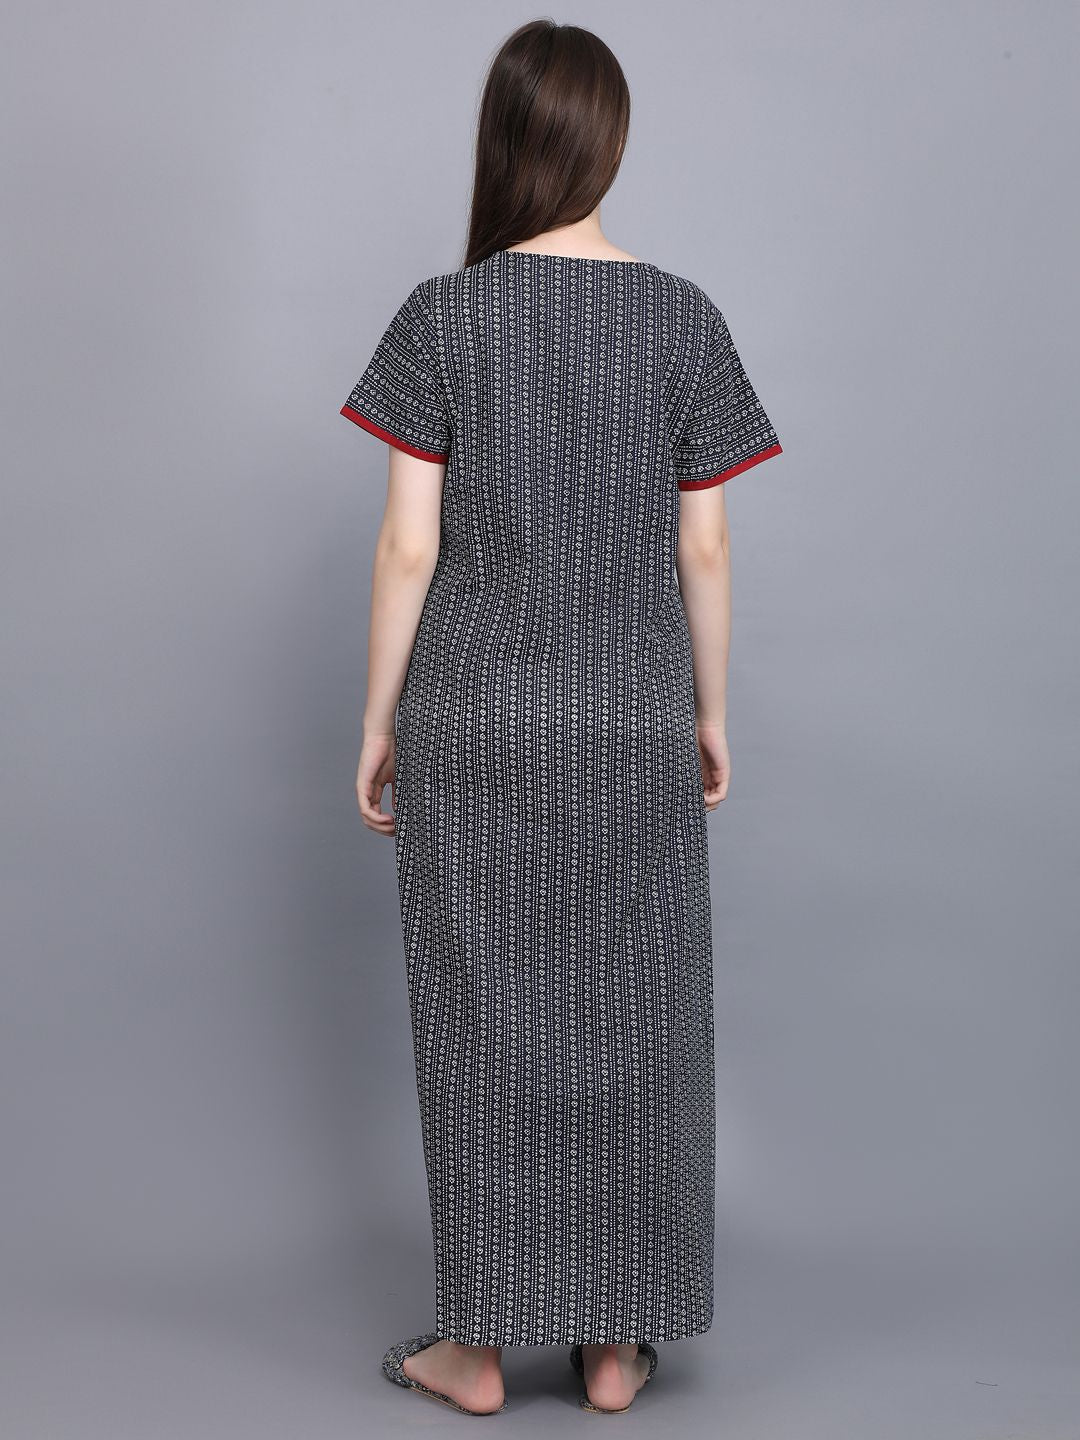 Evolove Women's 100% Cotton Printed Maxi Nightgown Long Nighty Sleepwear for Ladies Super Soft Comfortable Design  (Grey)